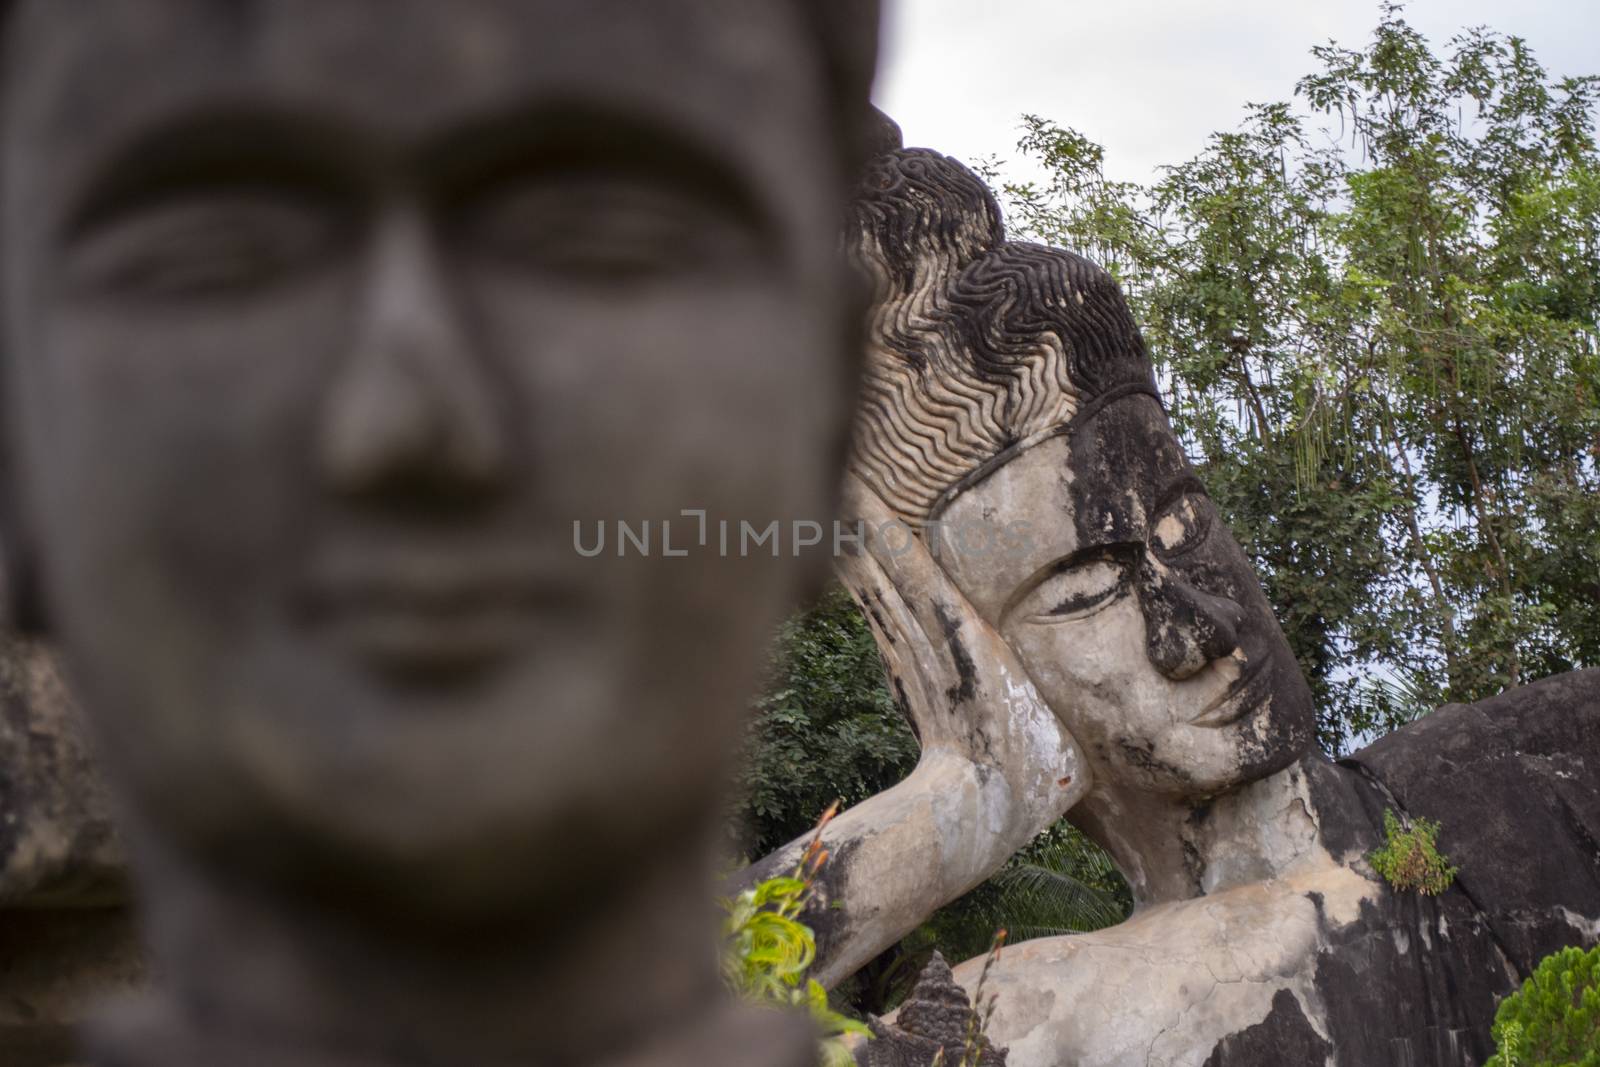 Xieng Khuan park, Laos, December 2011: sculptures in Buddha Park in Vientiane